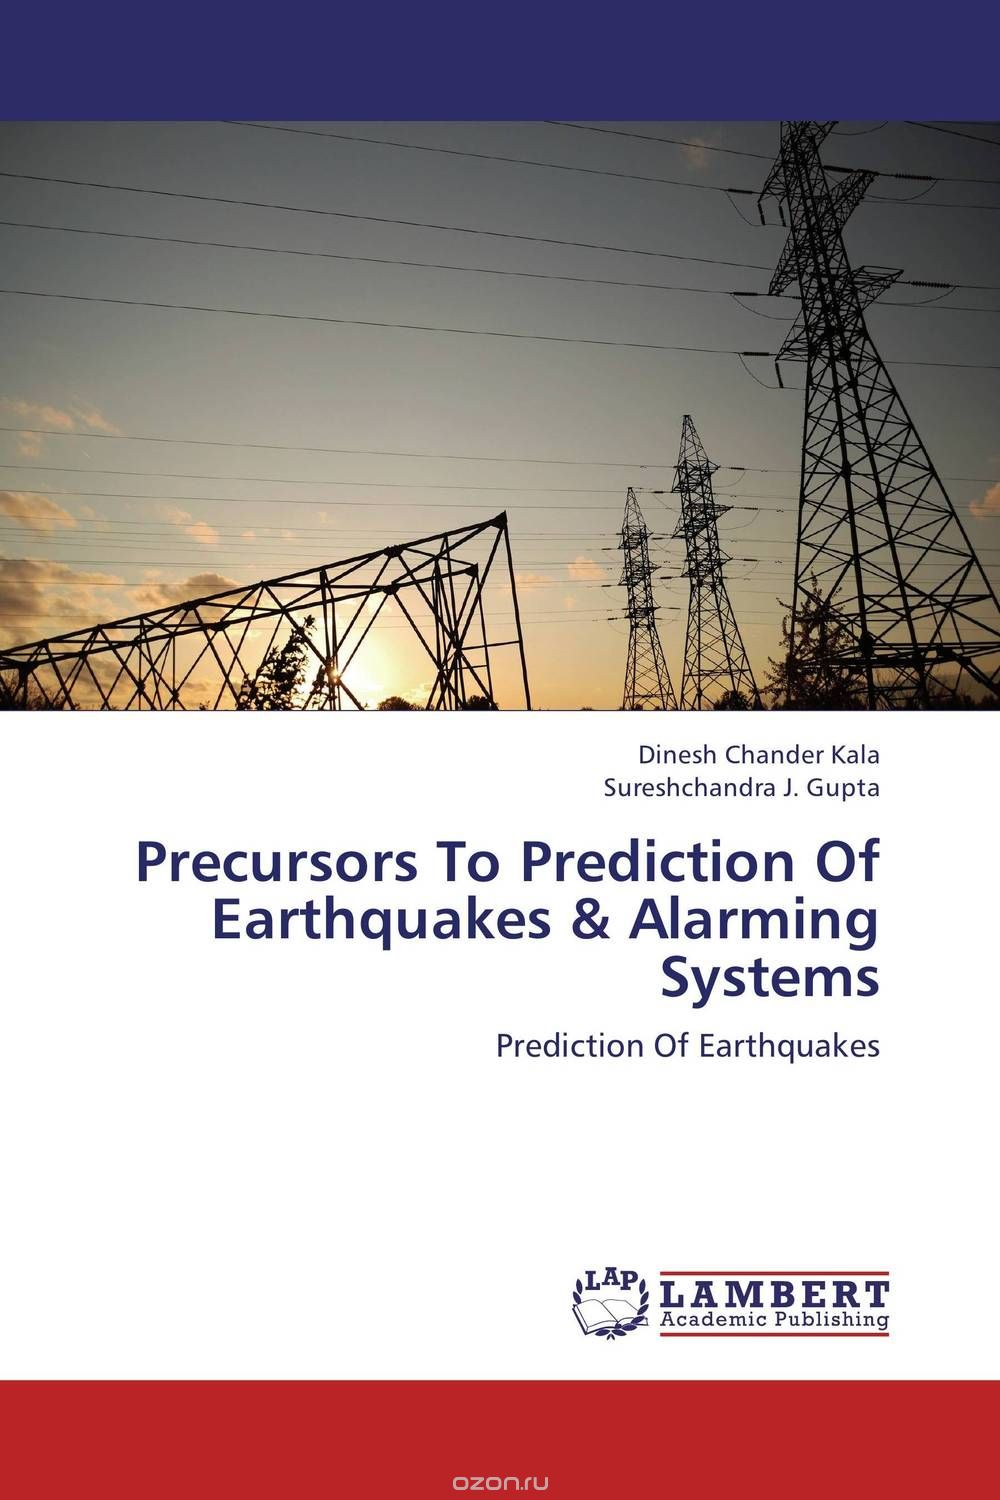 Precursors To Prediction Of Earthquakes & Alarming Systems